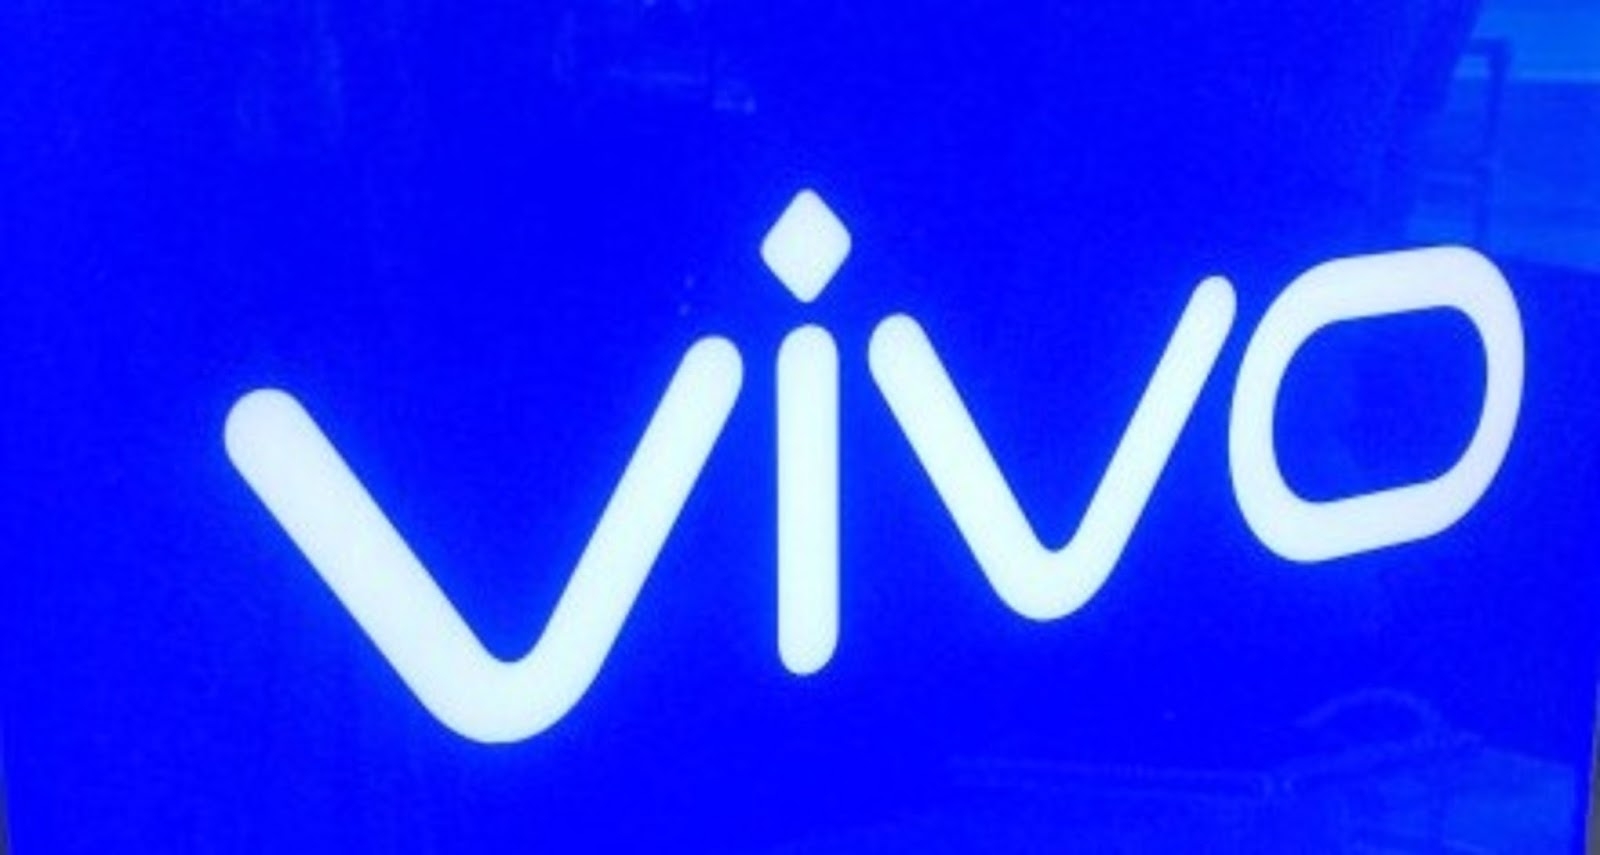 Vivo живо. Vivo лого. Vivo мобайл логотип. Обои с логотипом vivo. Обои с надписью vivo.